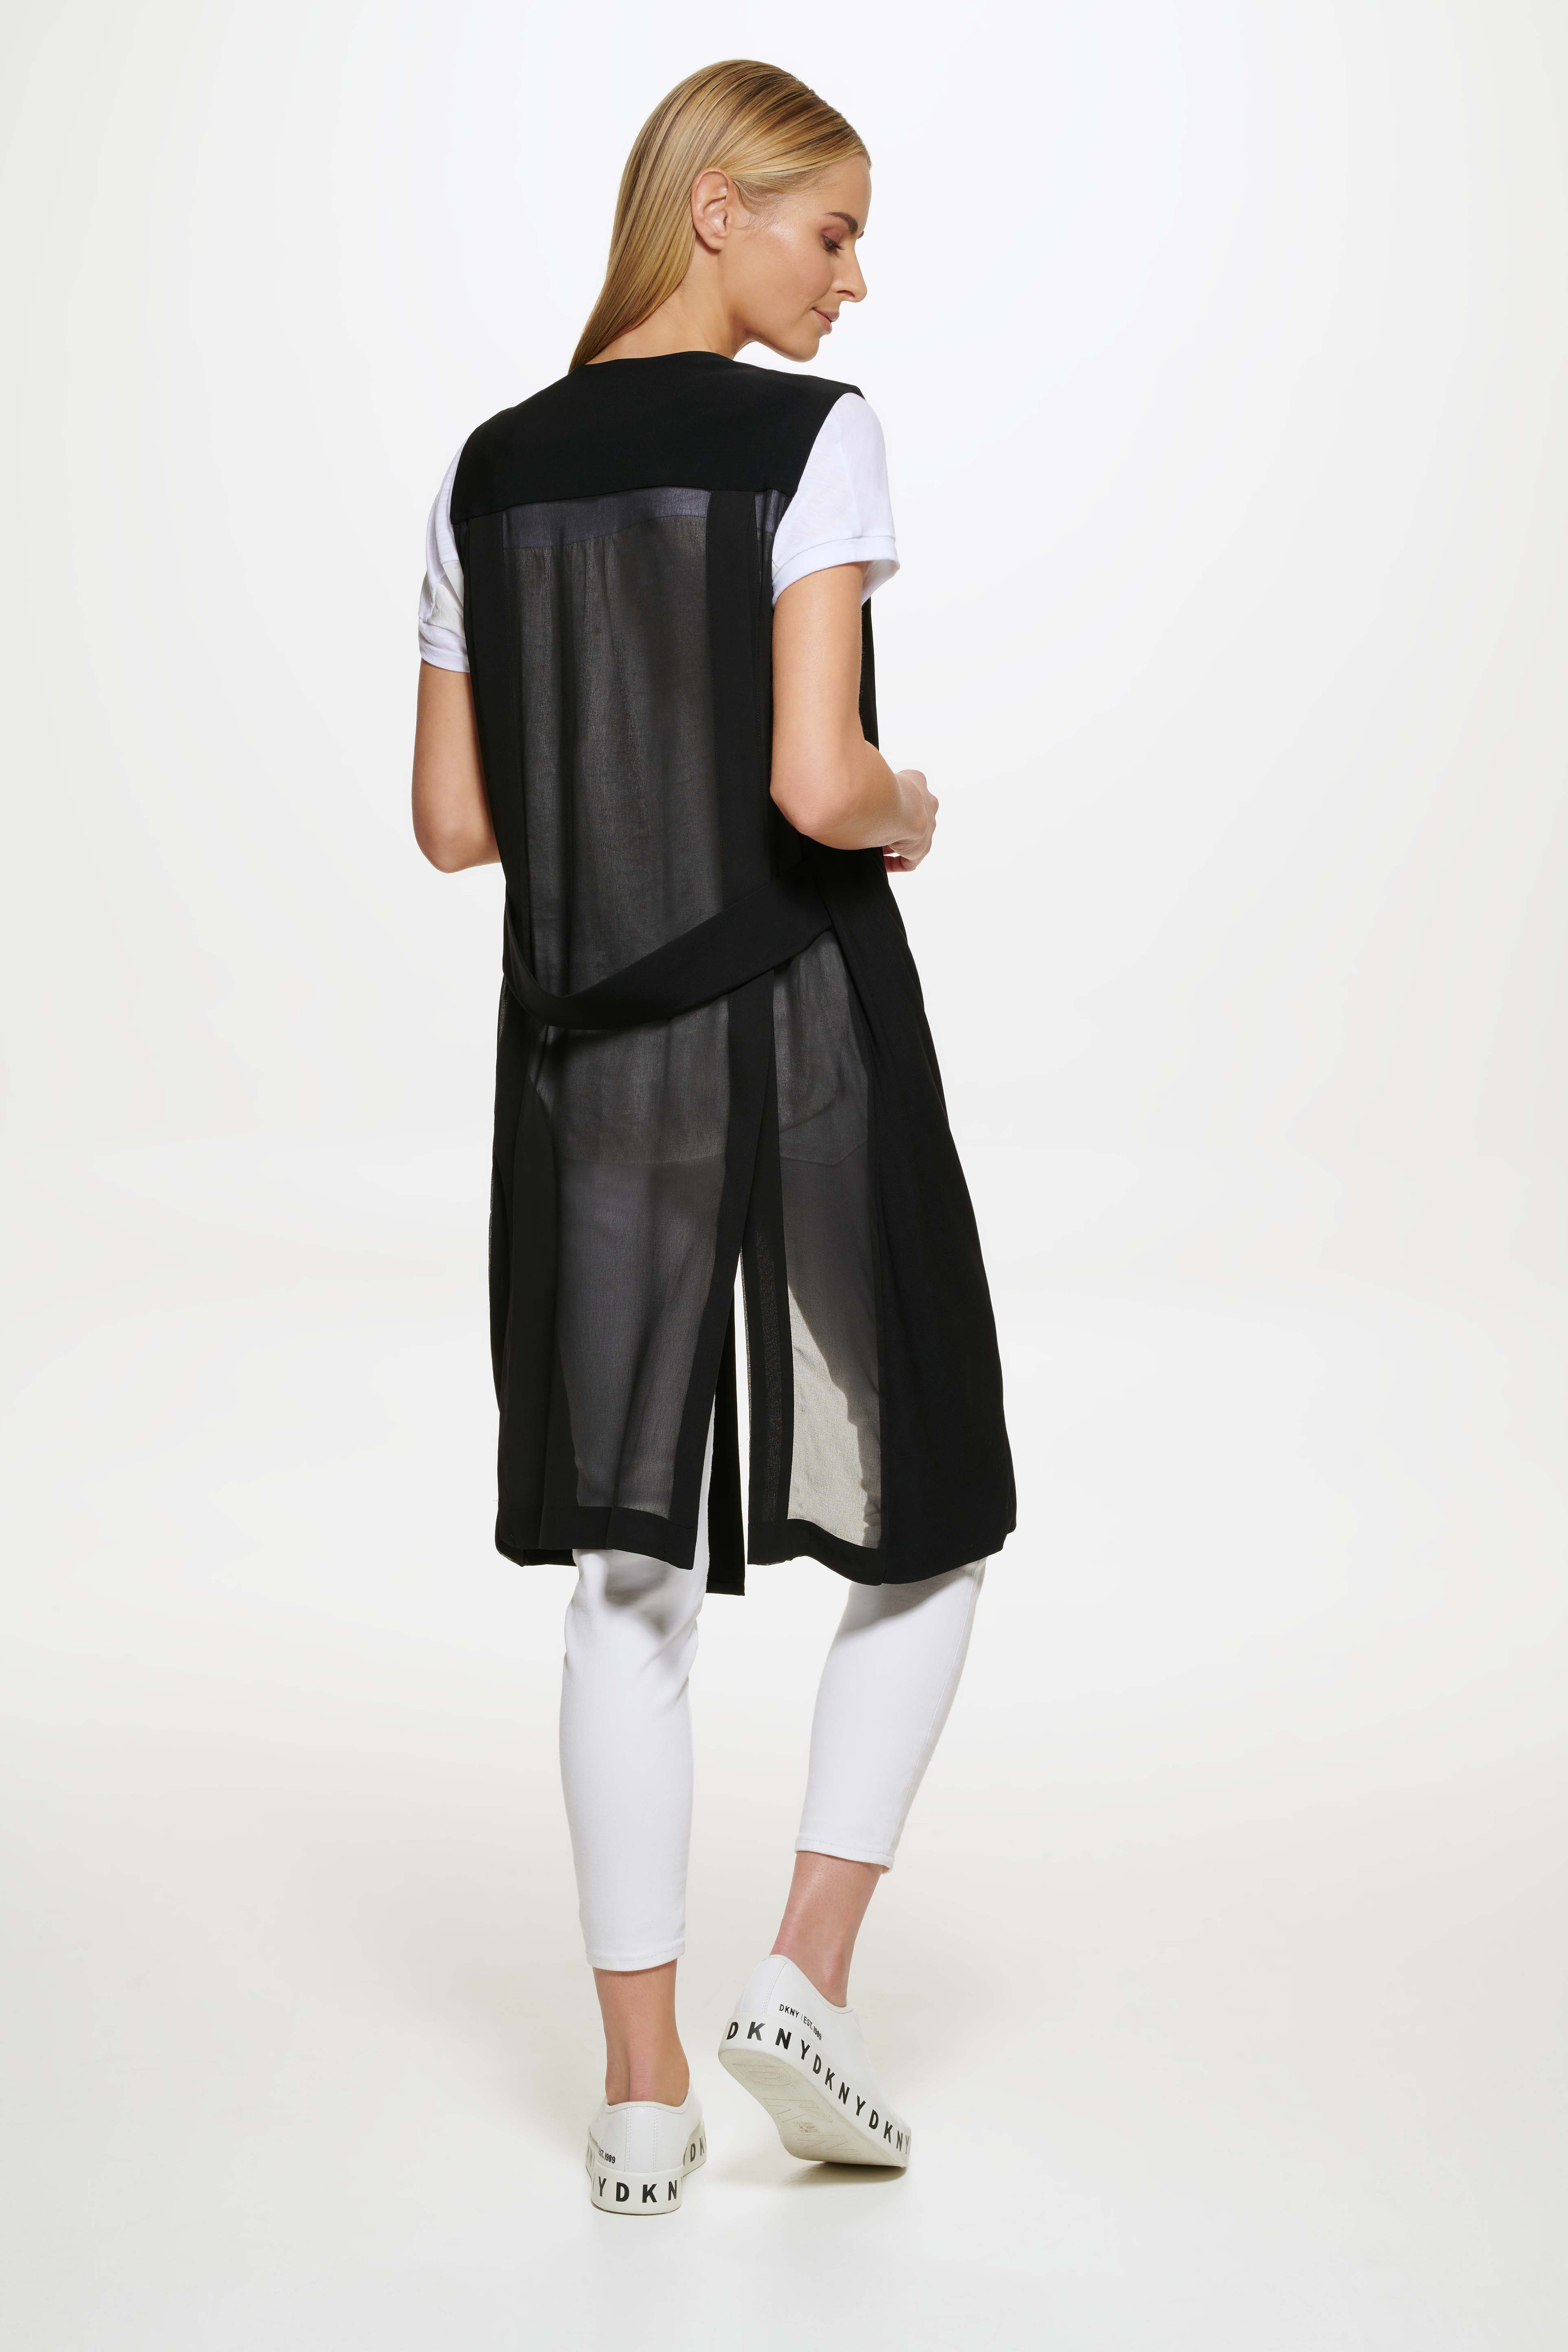 DKNY - Long cardigan with chiffon back, Black, large image number 5